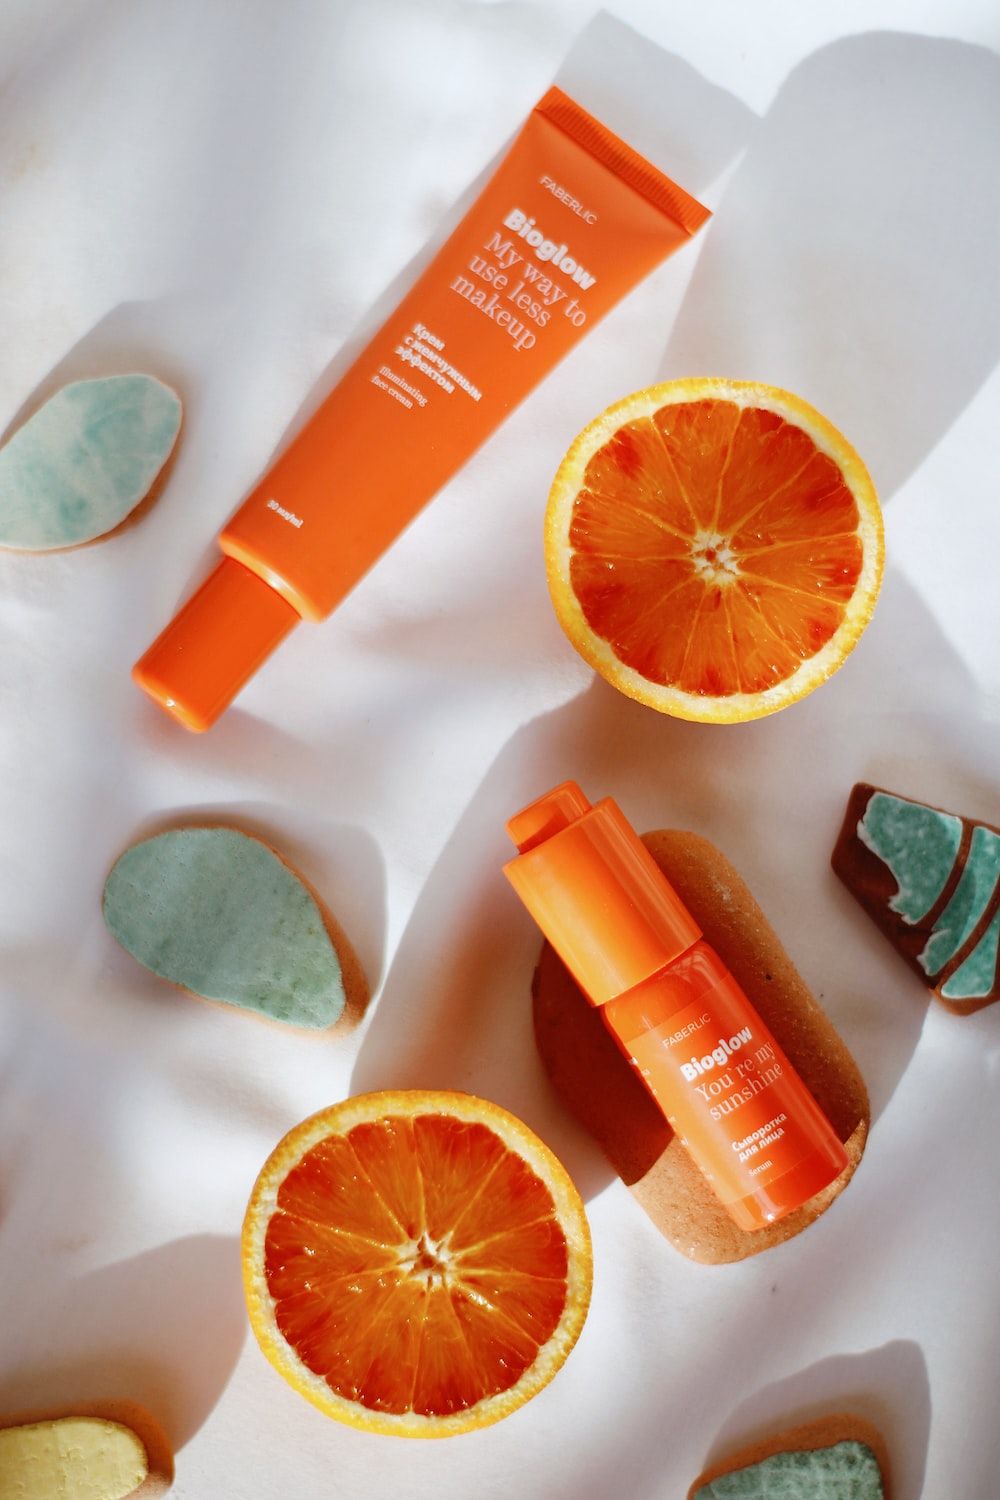 Two orange Skingredients skincare products next to orange slices on a white background - Orange